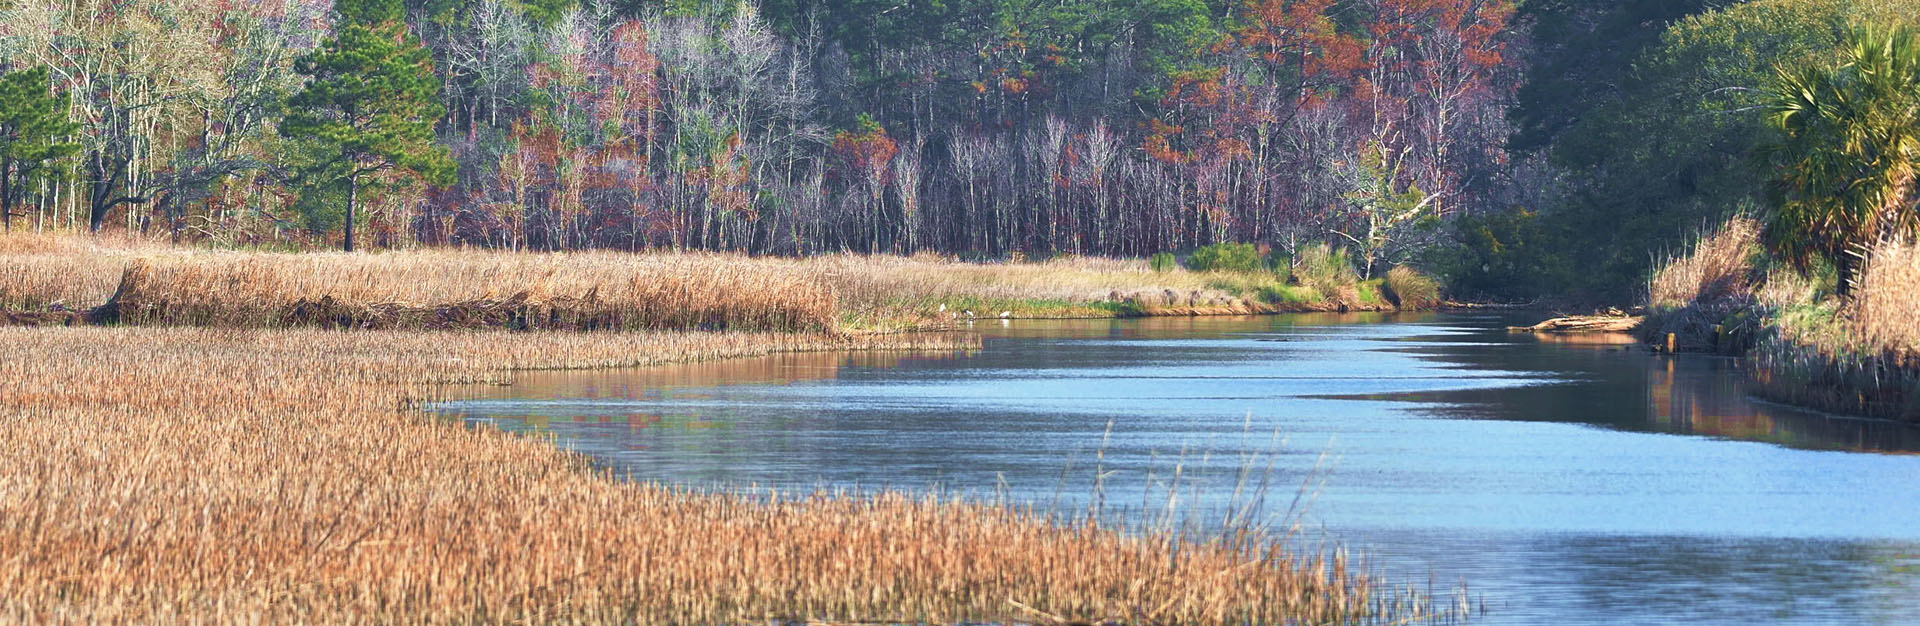 Scenic South Carolina Wetland